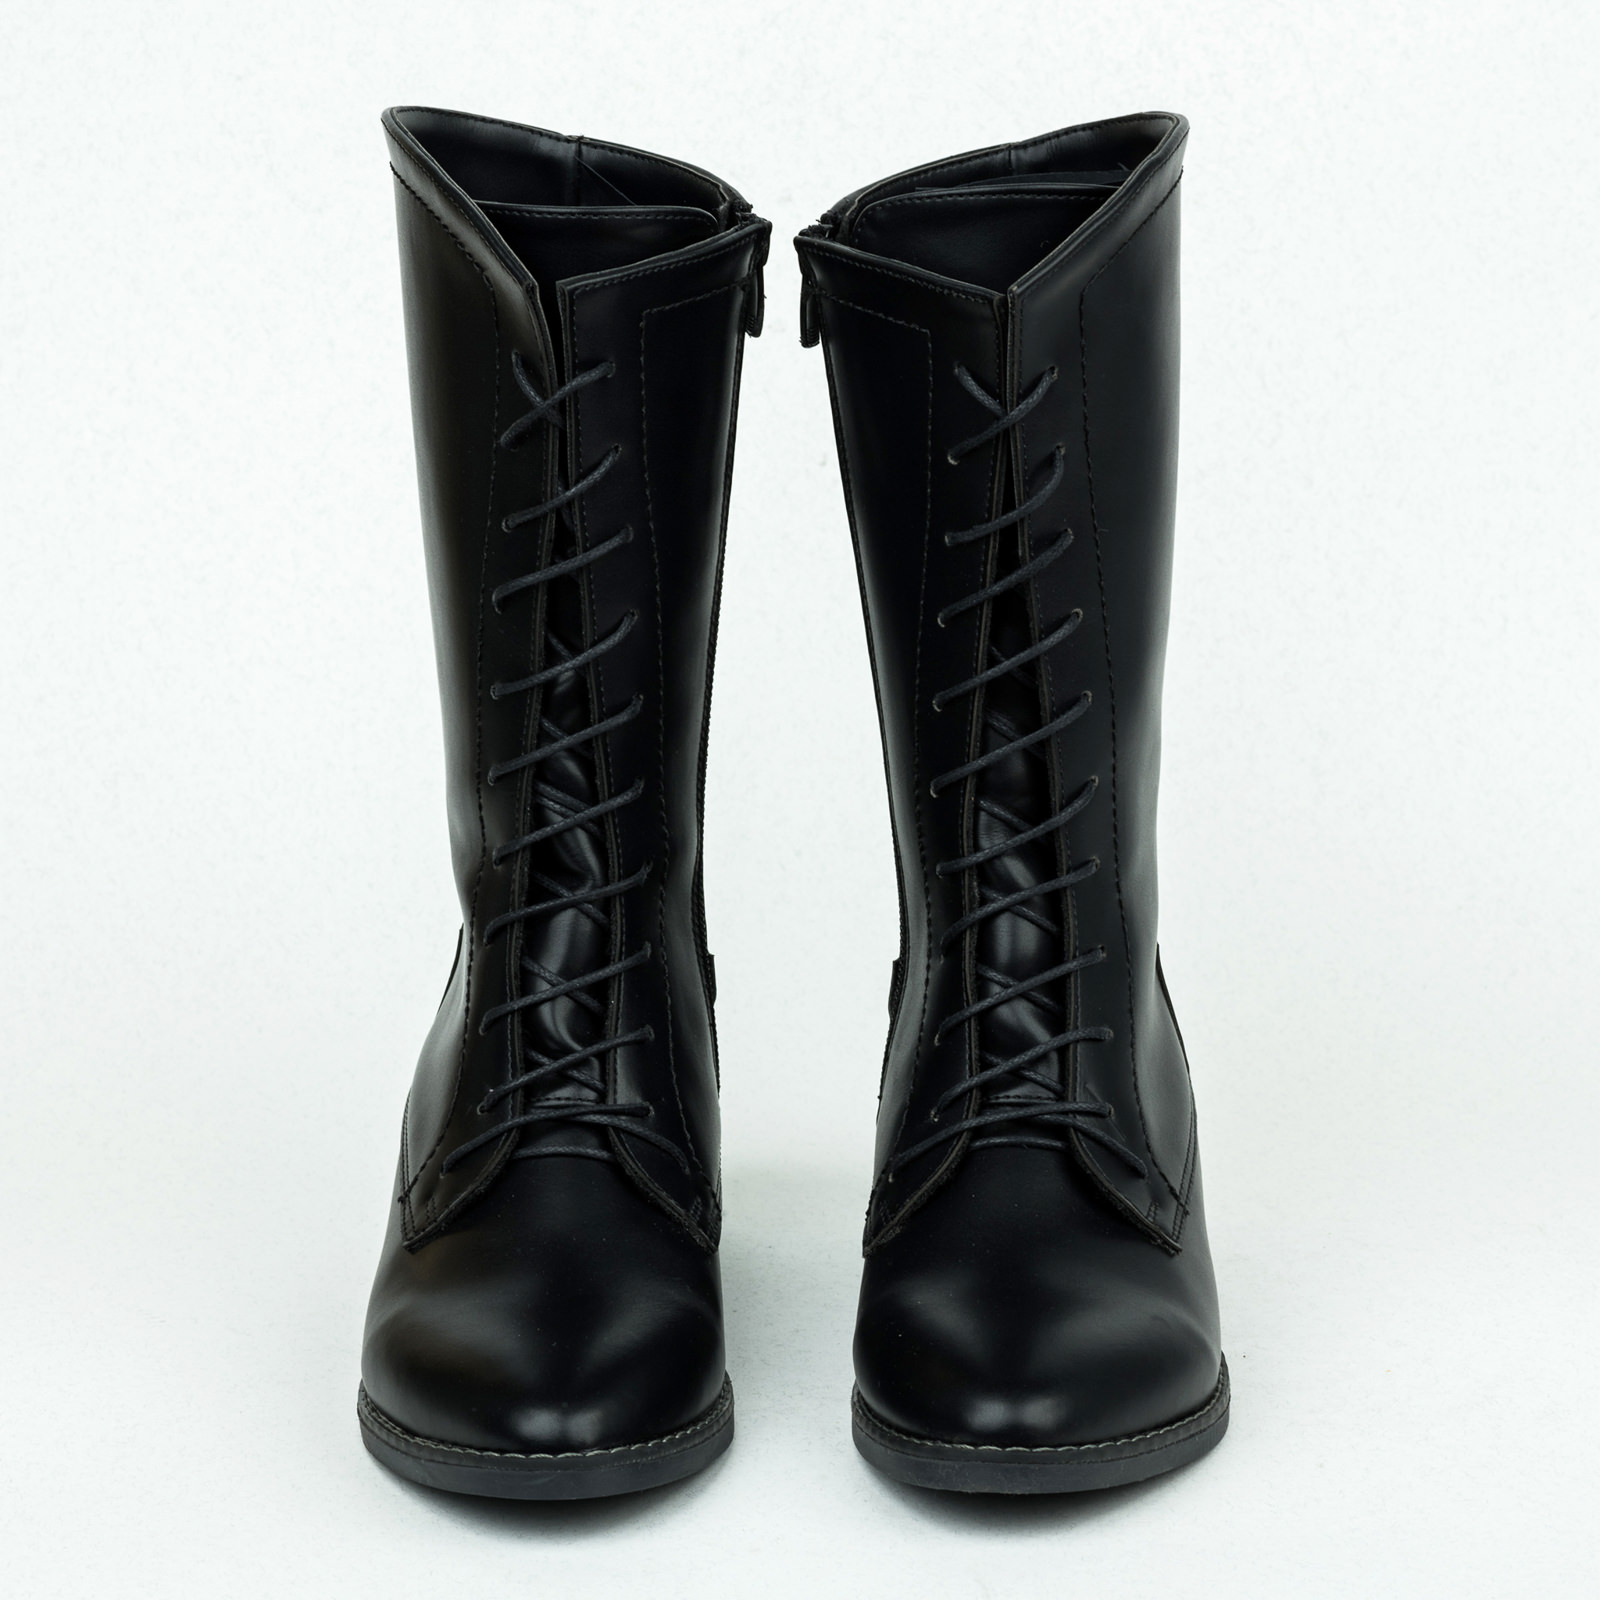 Women ankle boots B144 - BLACK